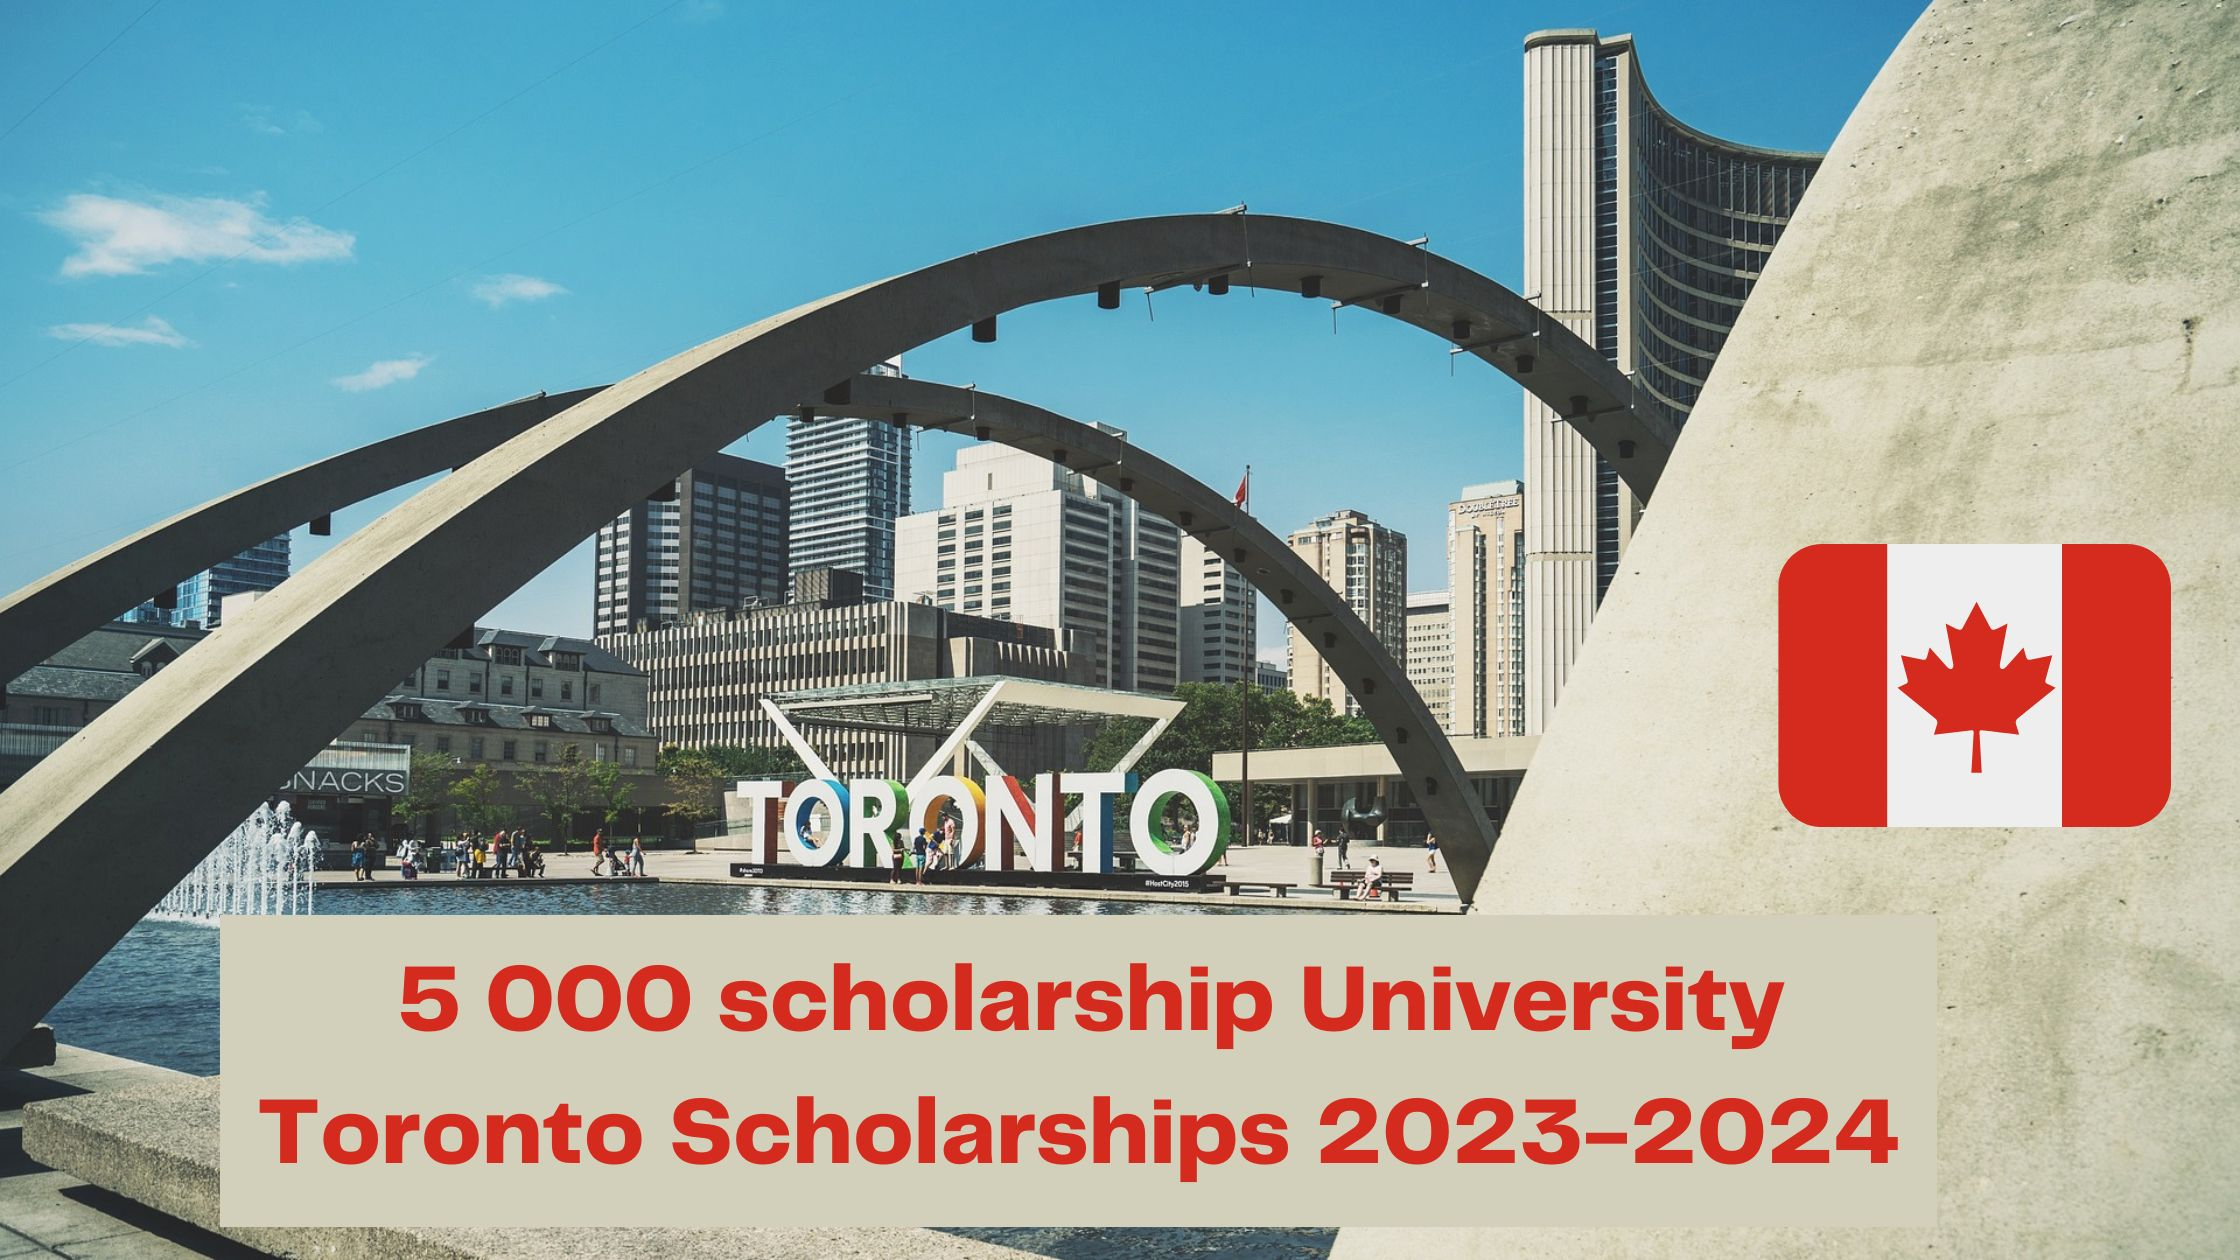 5 000 scholarship University Toronto Scholarships 2023-2024